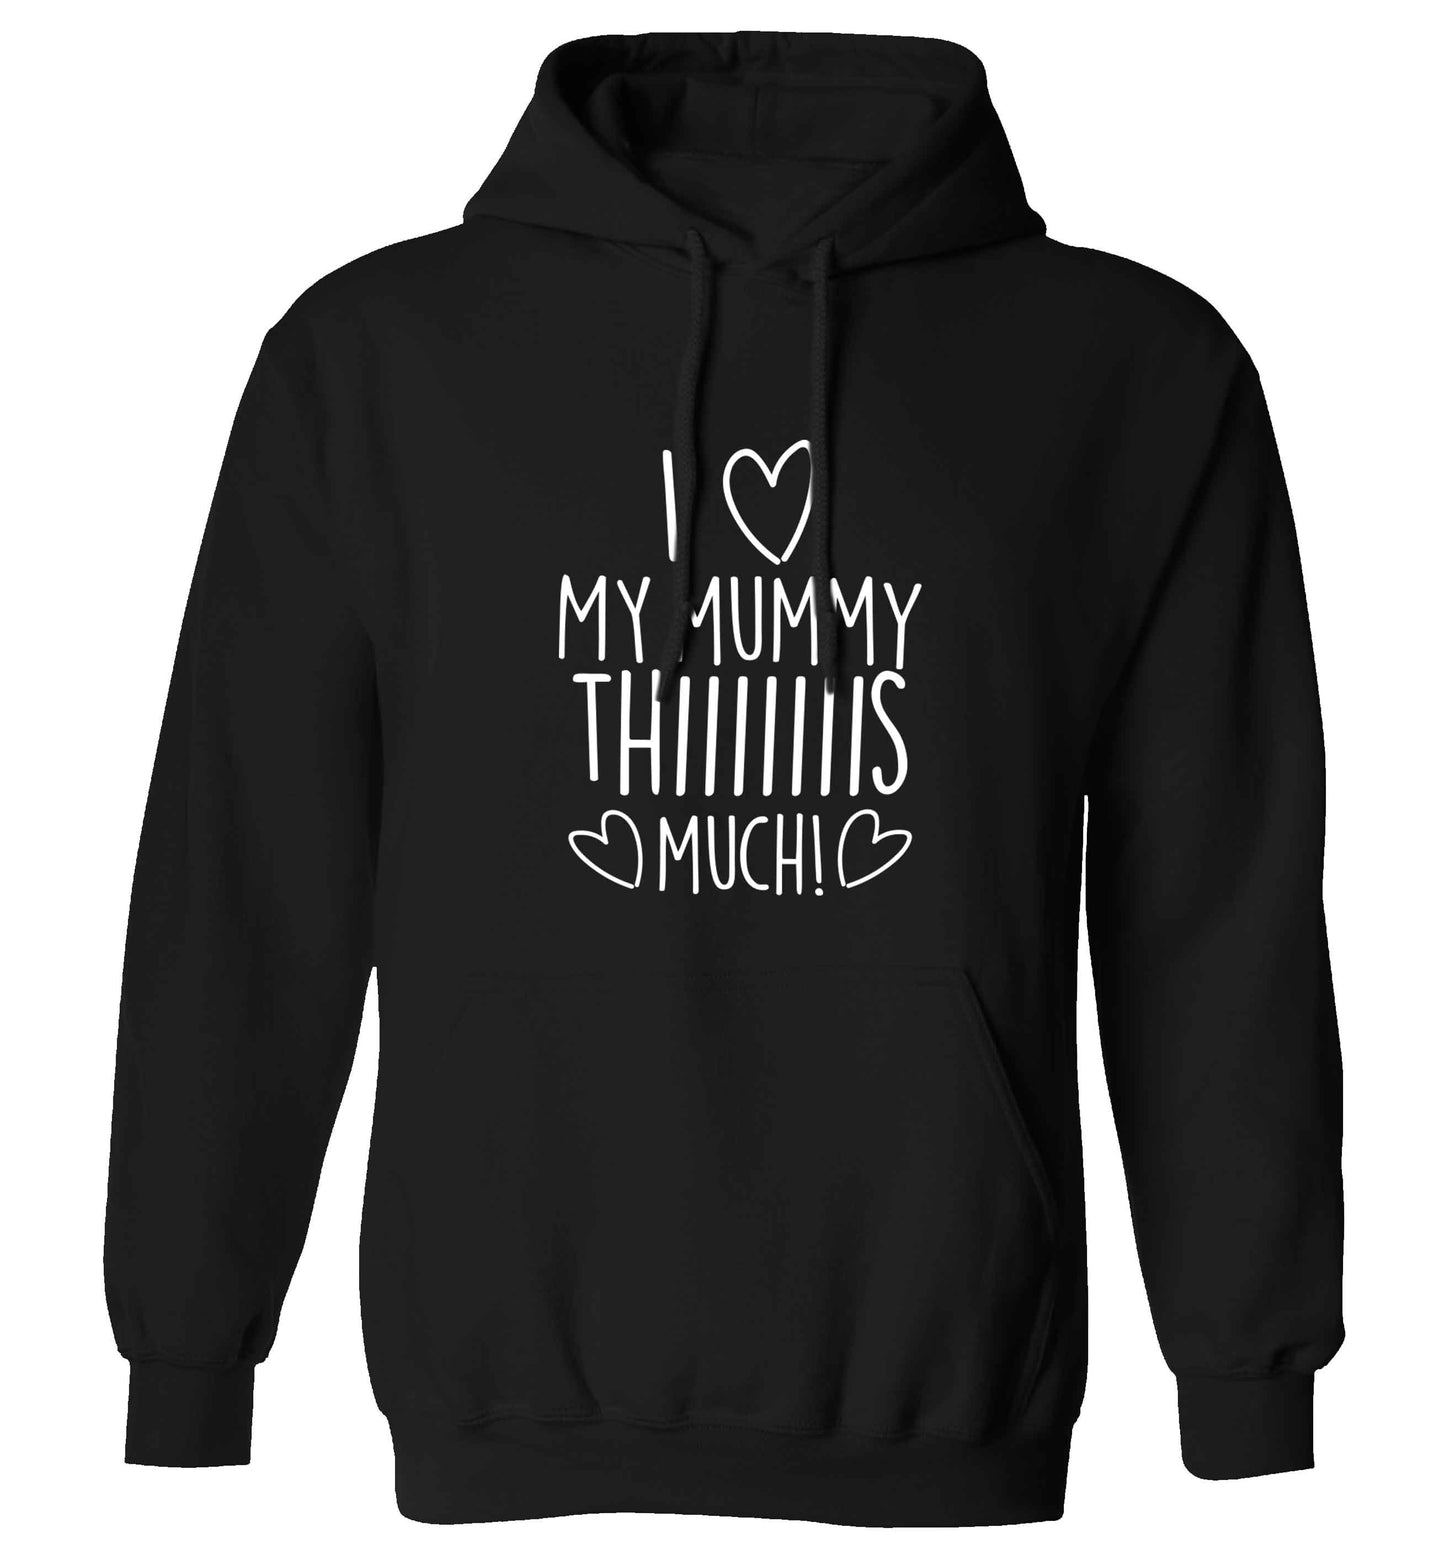 I love my mummy thiiiiis much! adults unisex black hoodie 2XL